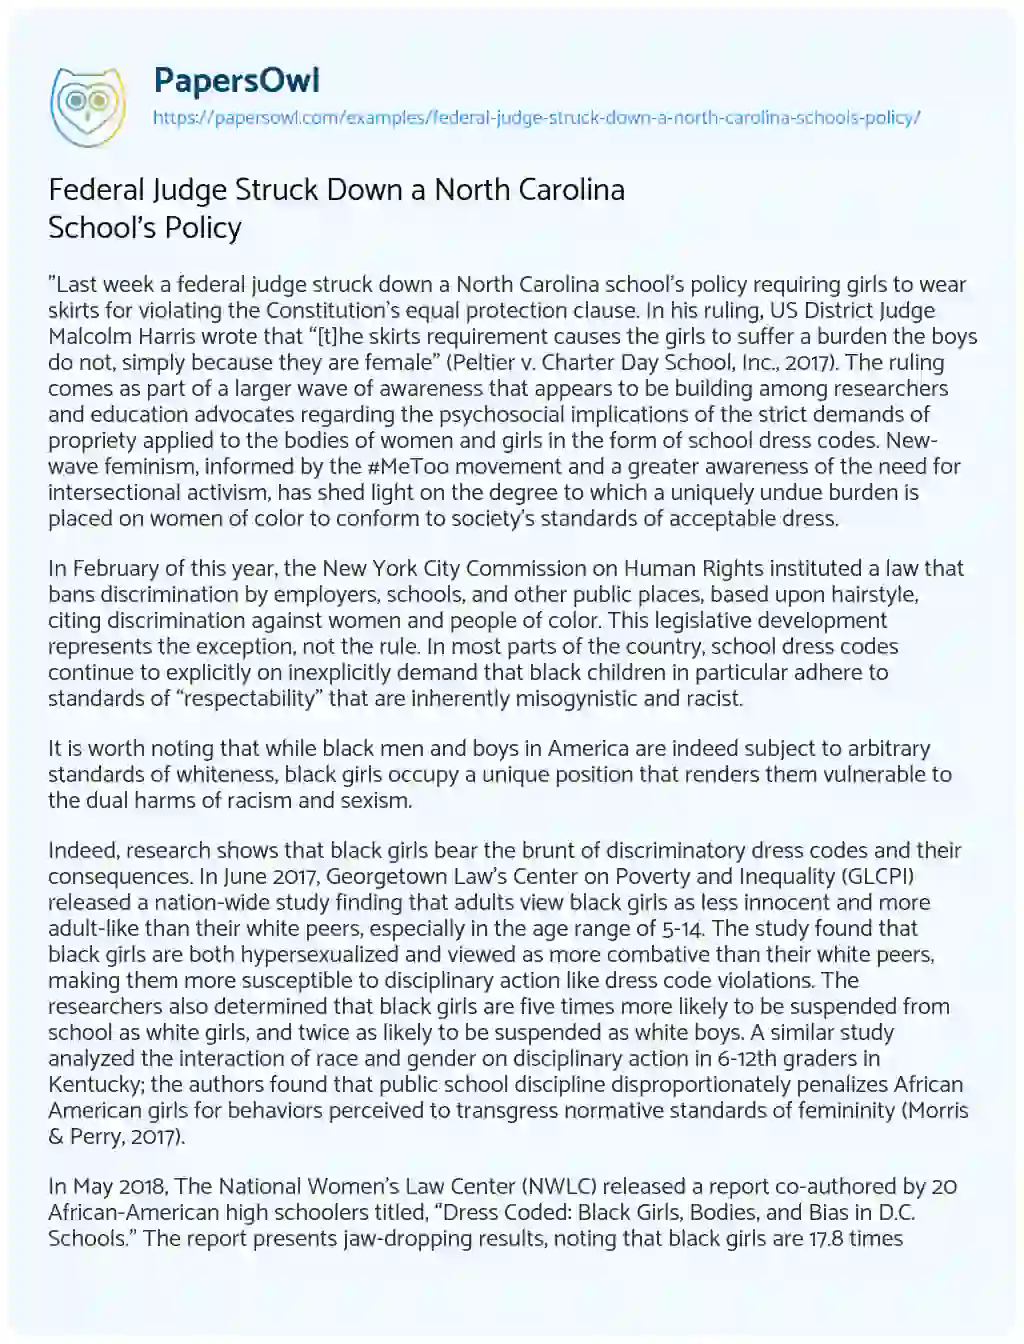 Essay on Federal Judge Struck down a North Carolina School’s Policy